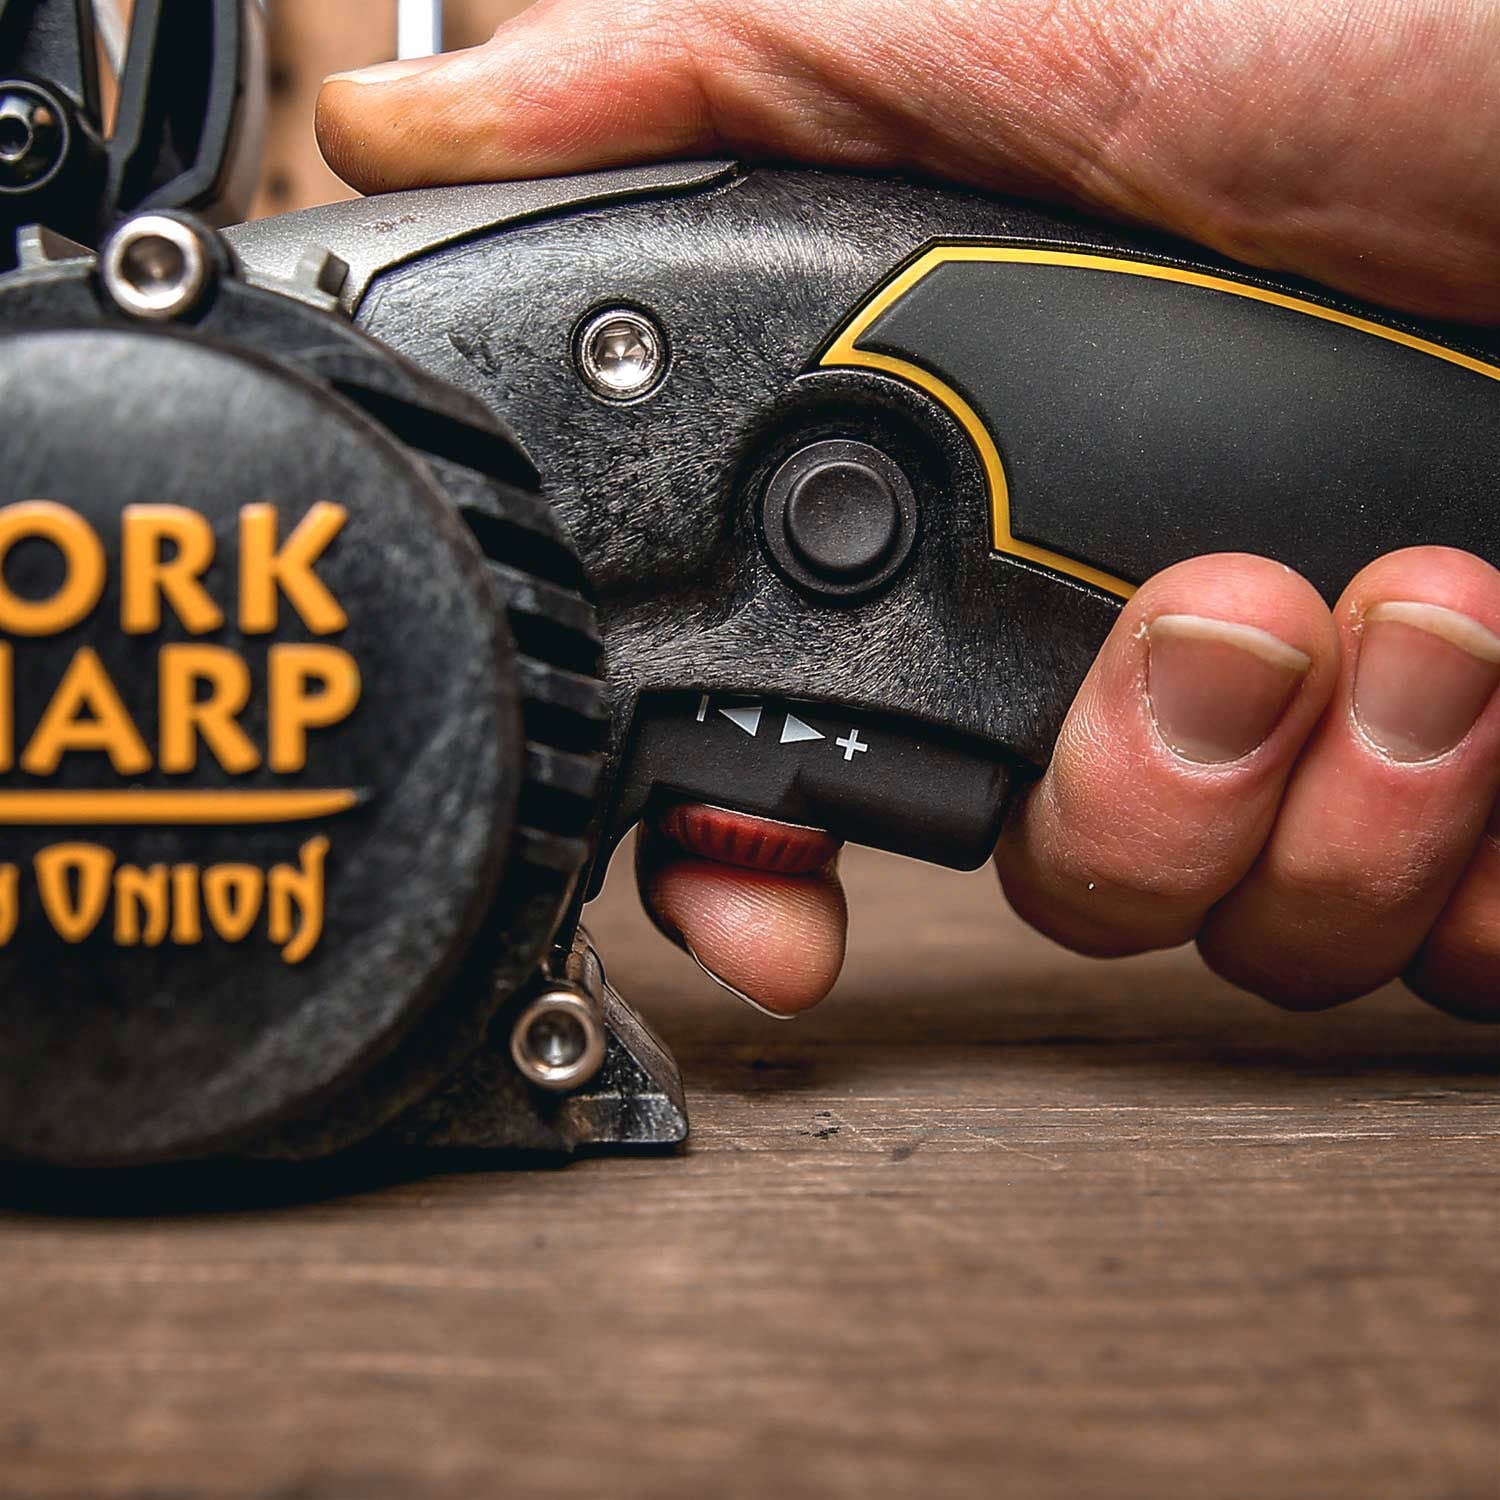 Work Sharp - Ken Onion Edition Knife & Tool Sharpener